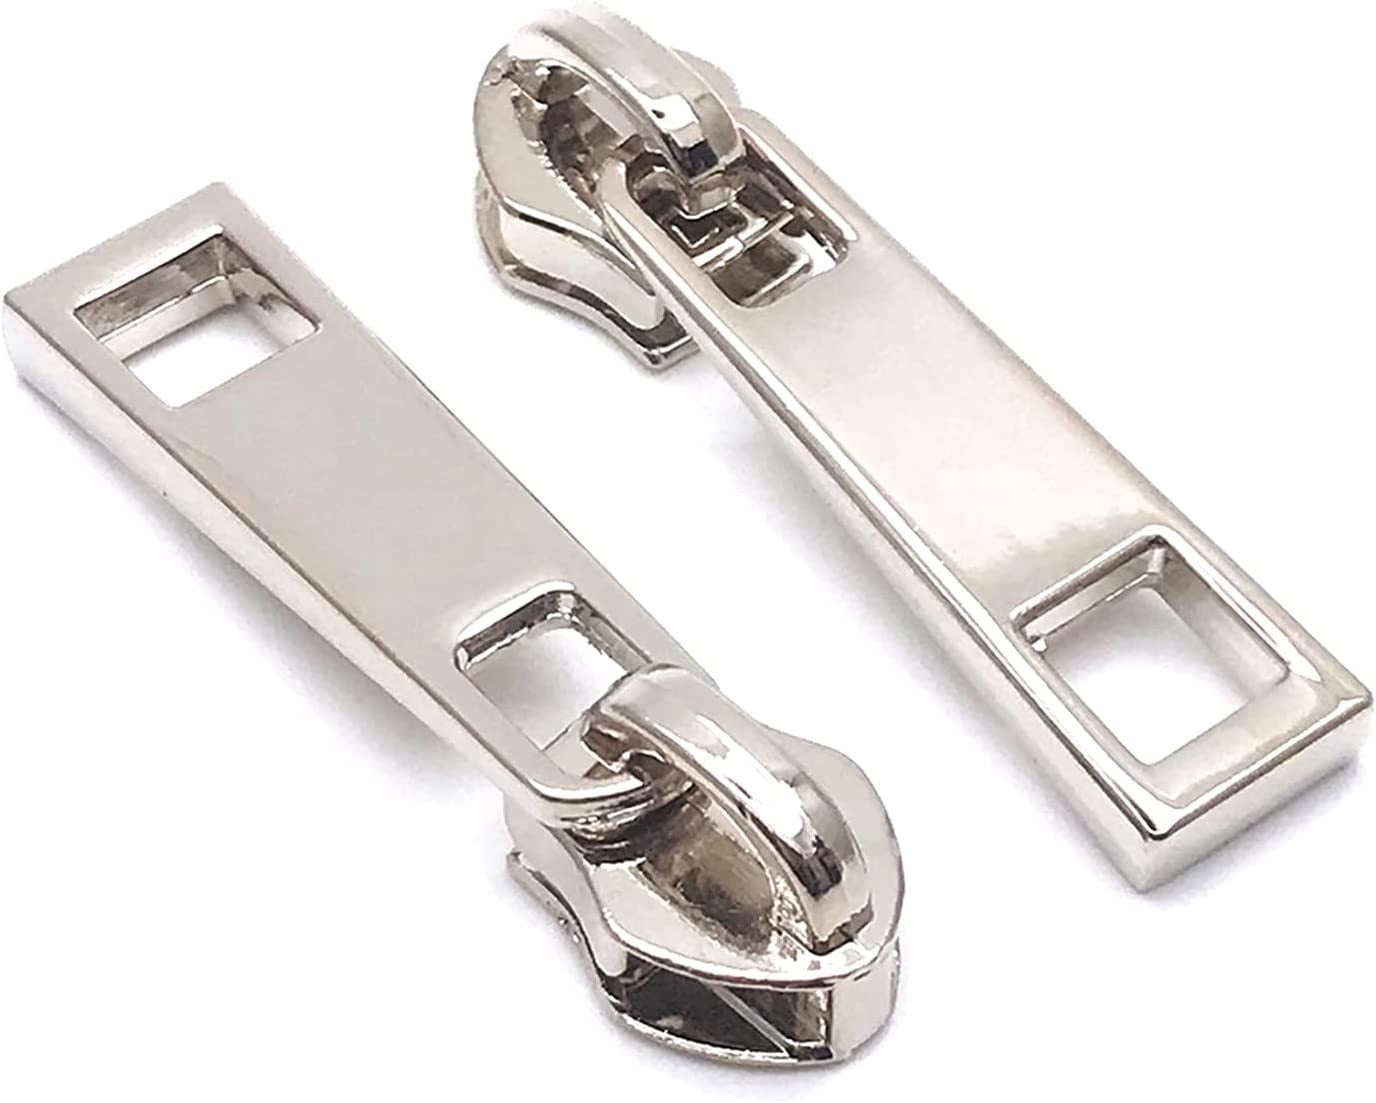 Zippers Puller 5# Nylon Zipper Pulls Charm Zips Repair Zipper Pull  Replacement Slider For Purse Garment Sewing Accessories Bag